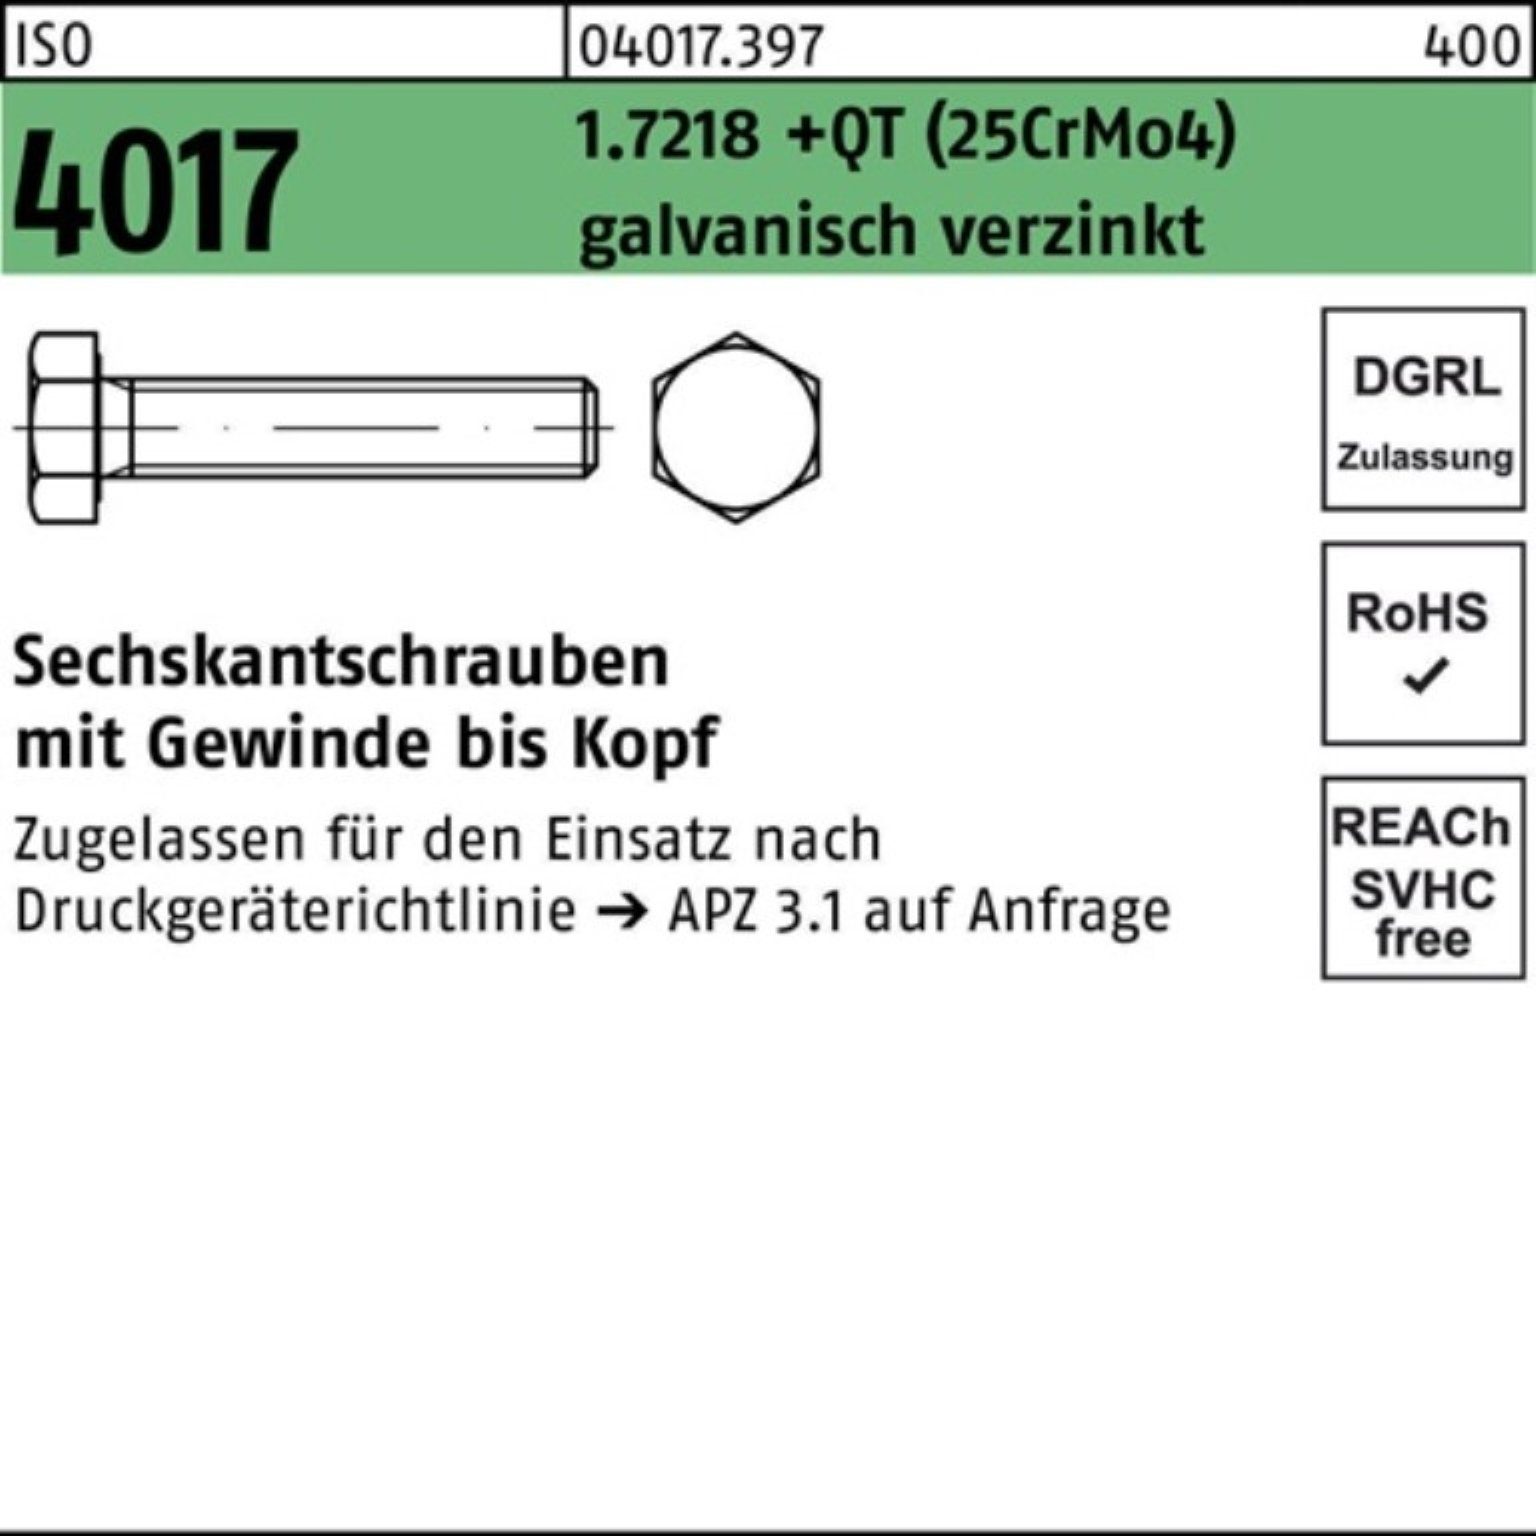 Sechskantschraube Bufab 1.7218 g +QT M12x90 (25CrMo4) Pack ISO Sechskantschraube 100er 4017 VG